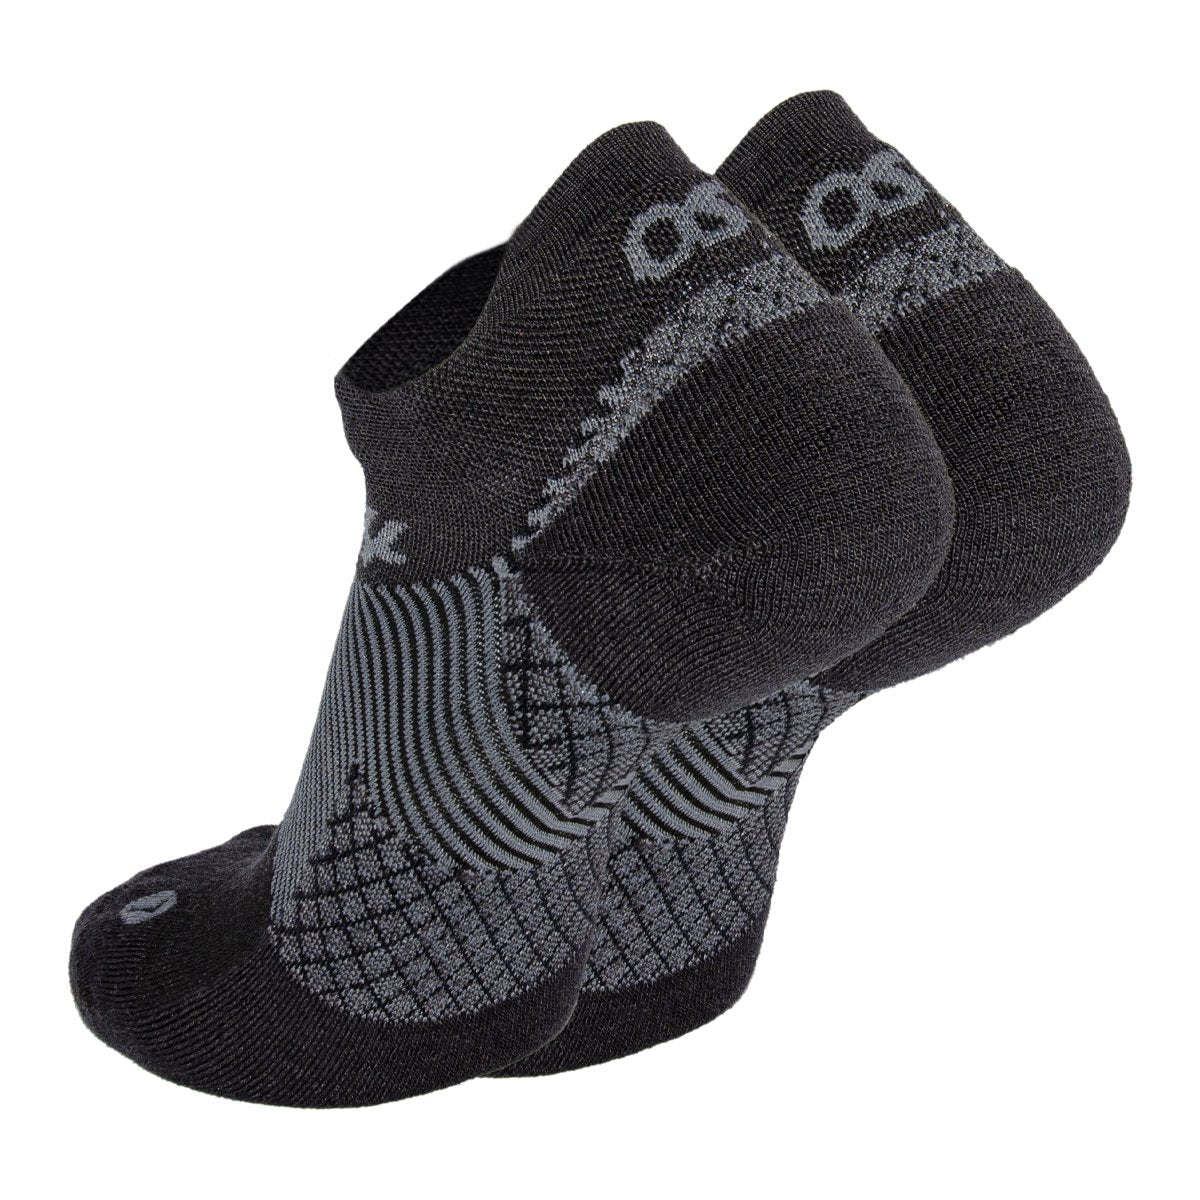 Os1st, FS4 Merino Plantar Fasciitis Compression No Show Double Tab Socks, Unisex, Black